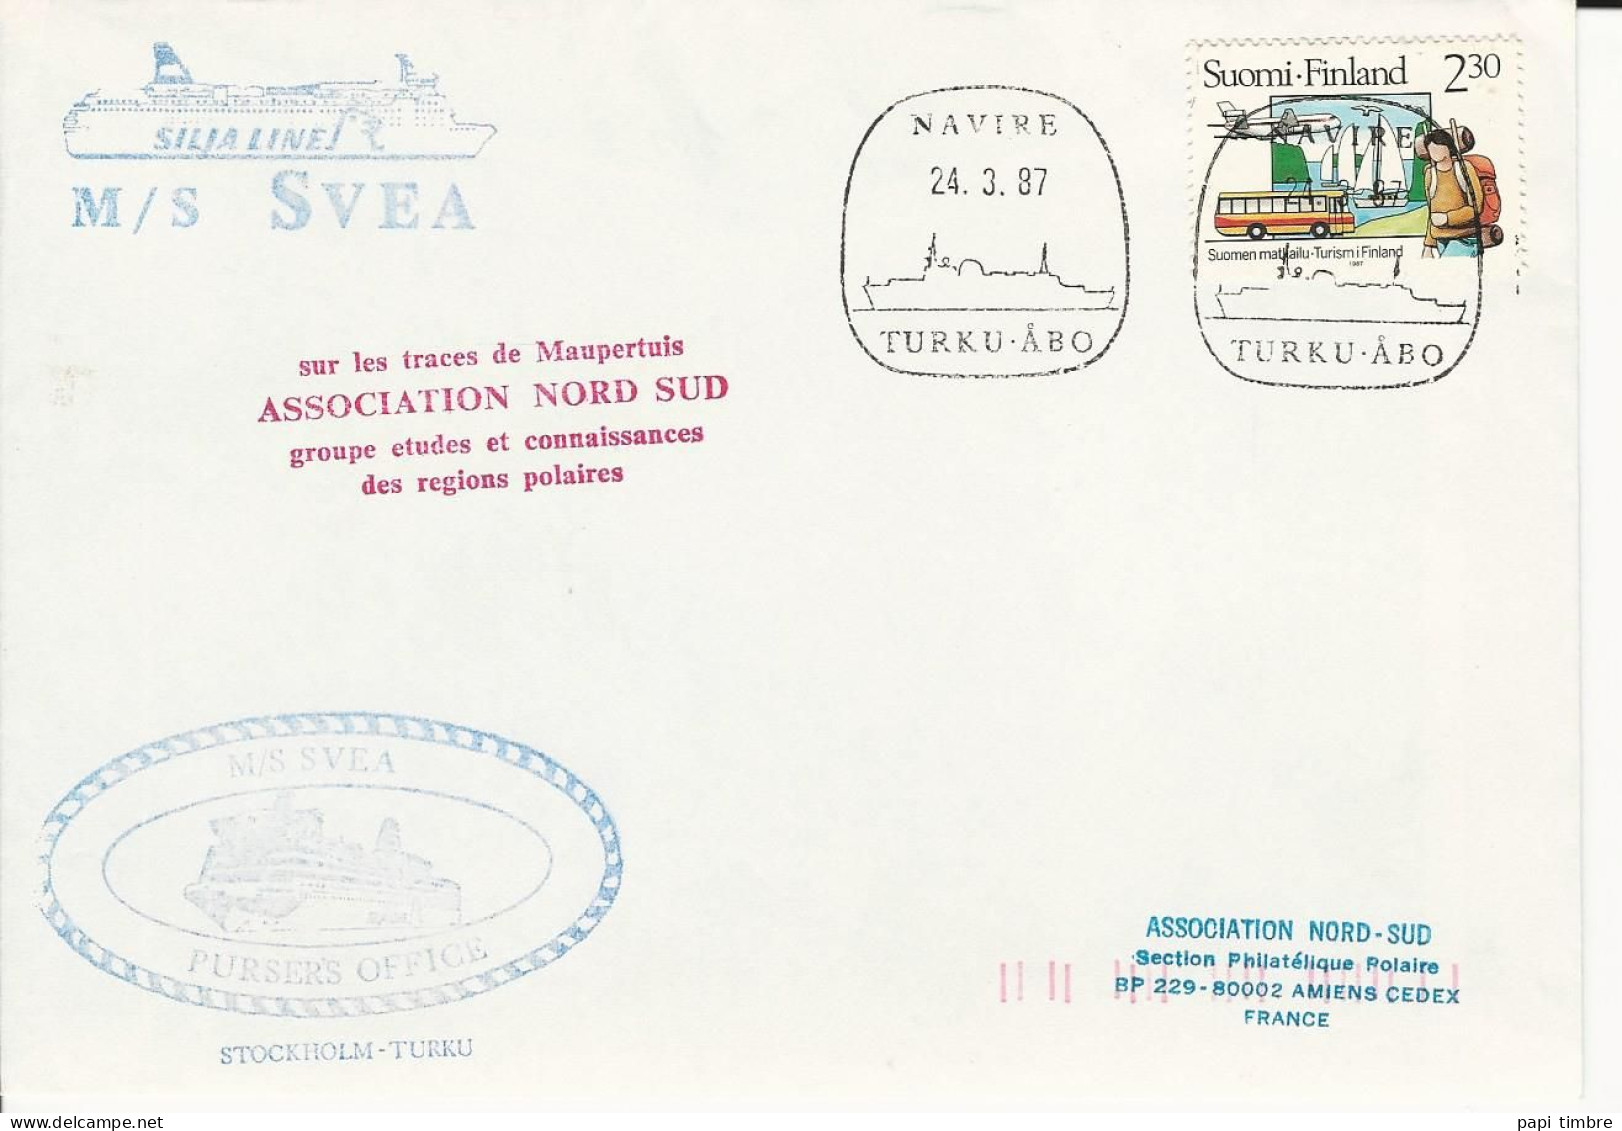 FINLANDE - Association Nord-Sud - M/S SVEA - Navire TURKU-ÂBO - 1987 - Programmes Scientifiques